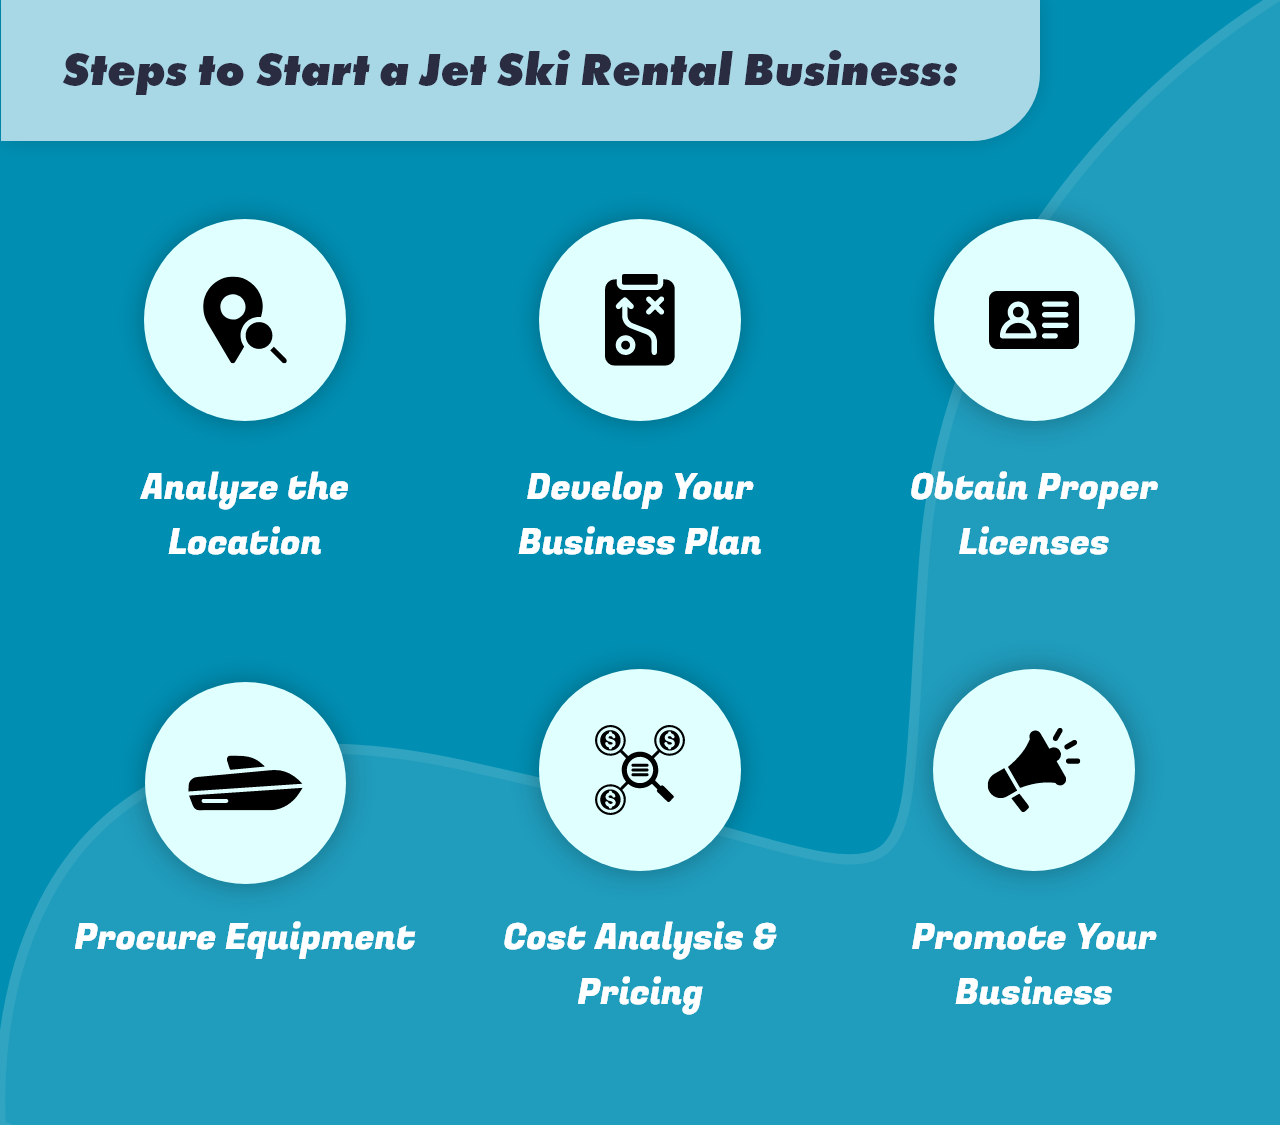 Steps to Start a Jet Ski Rental Business